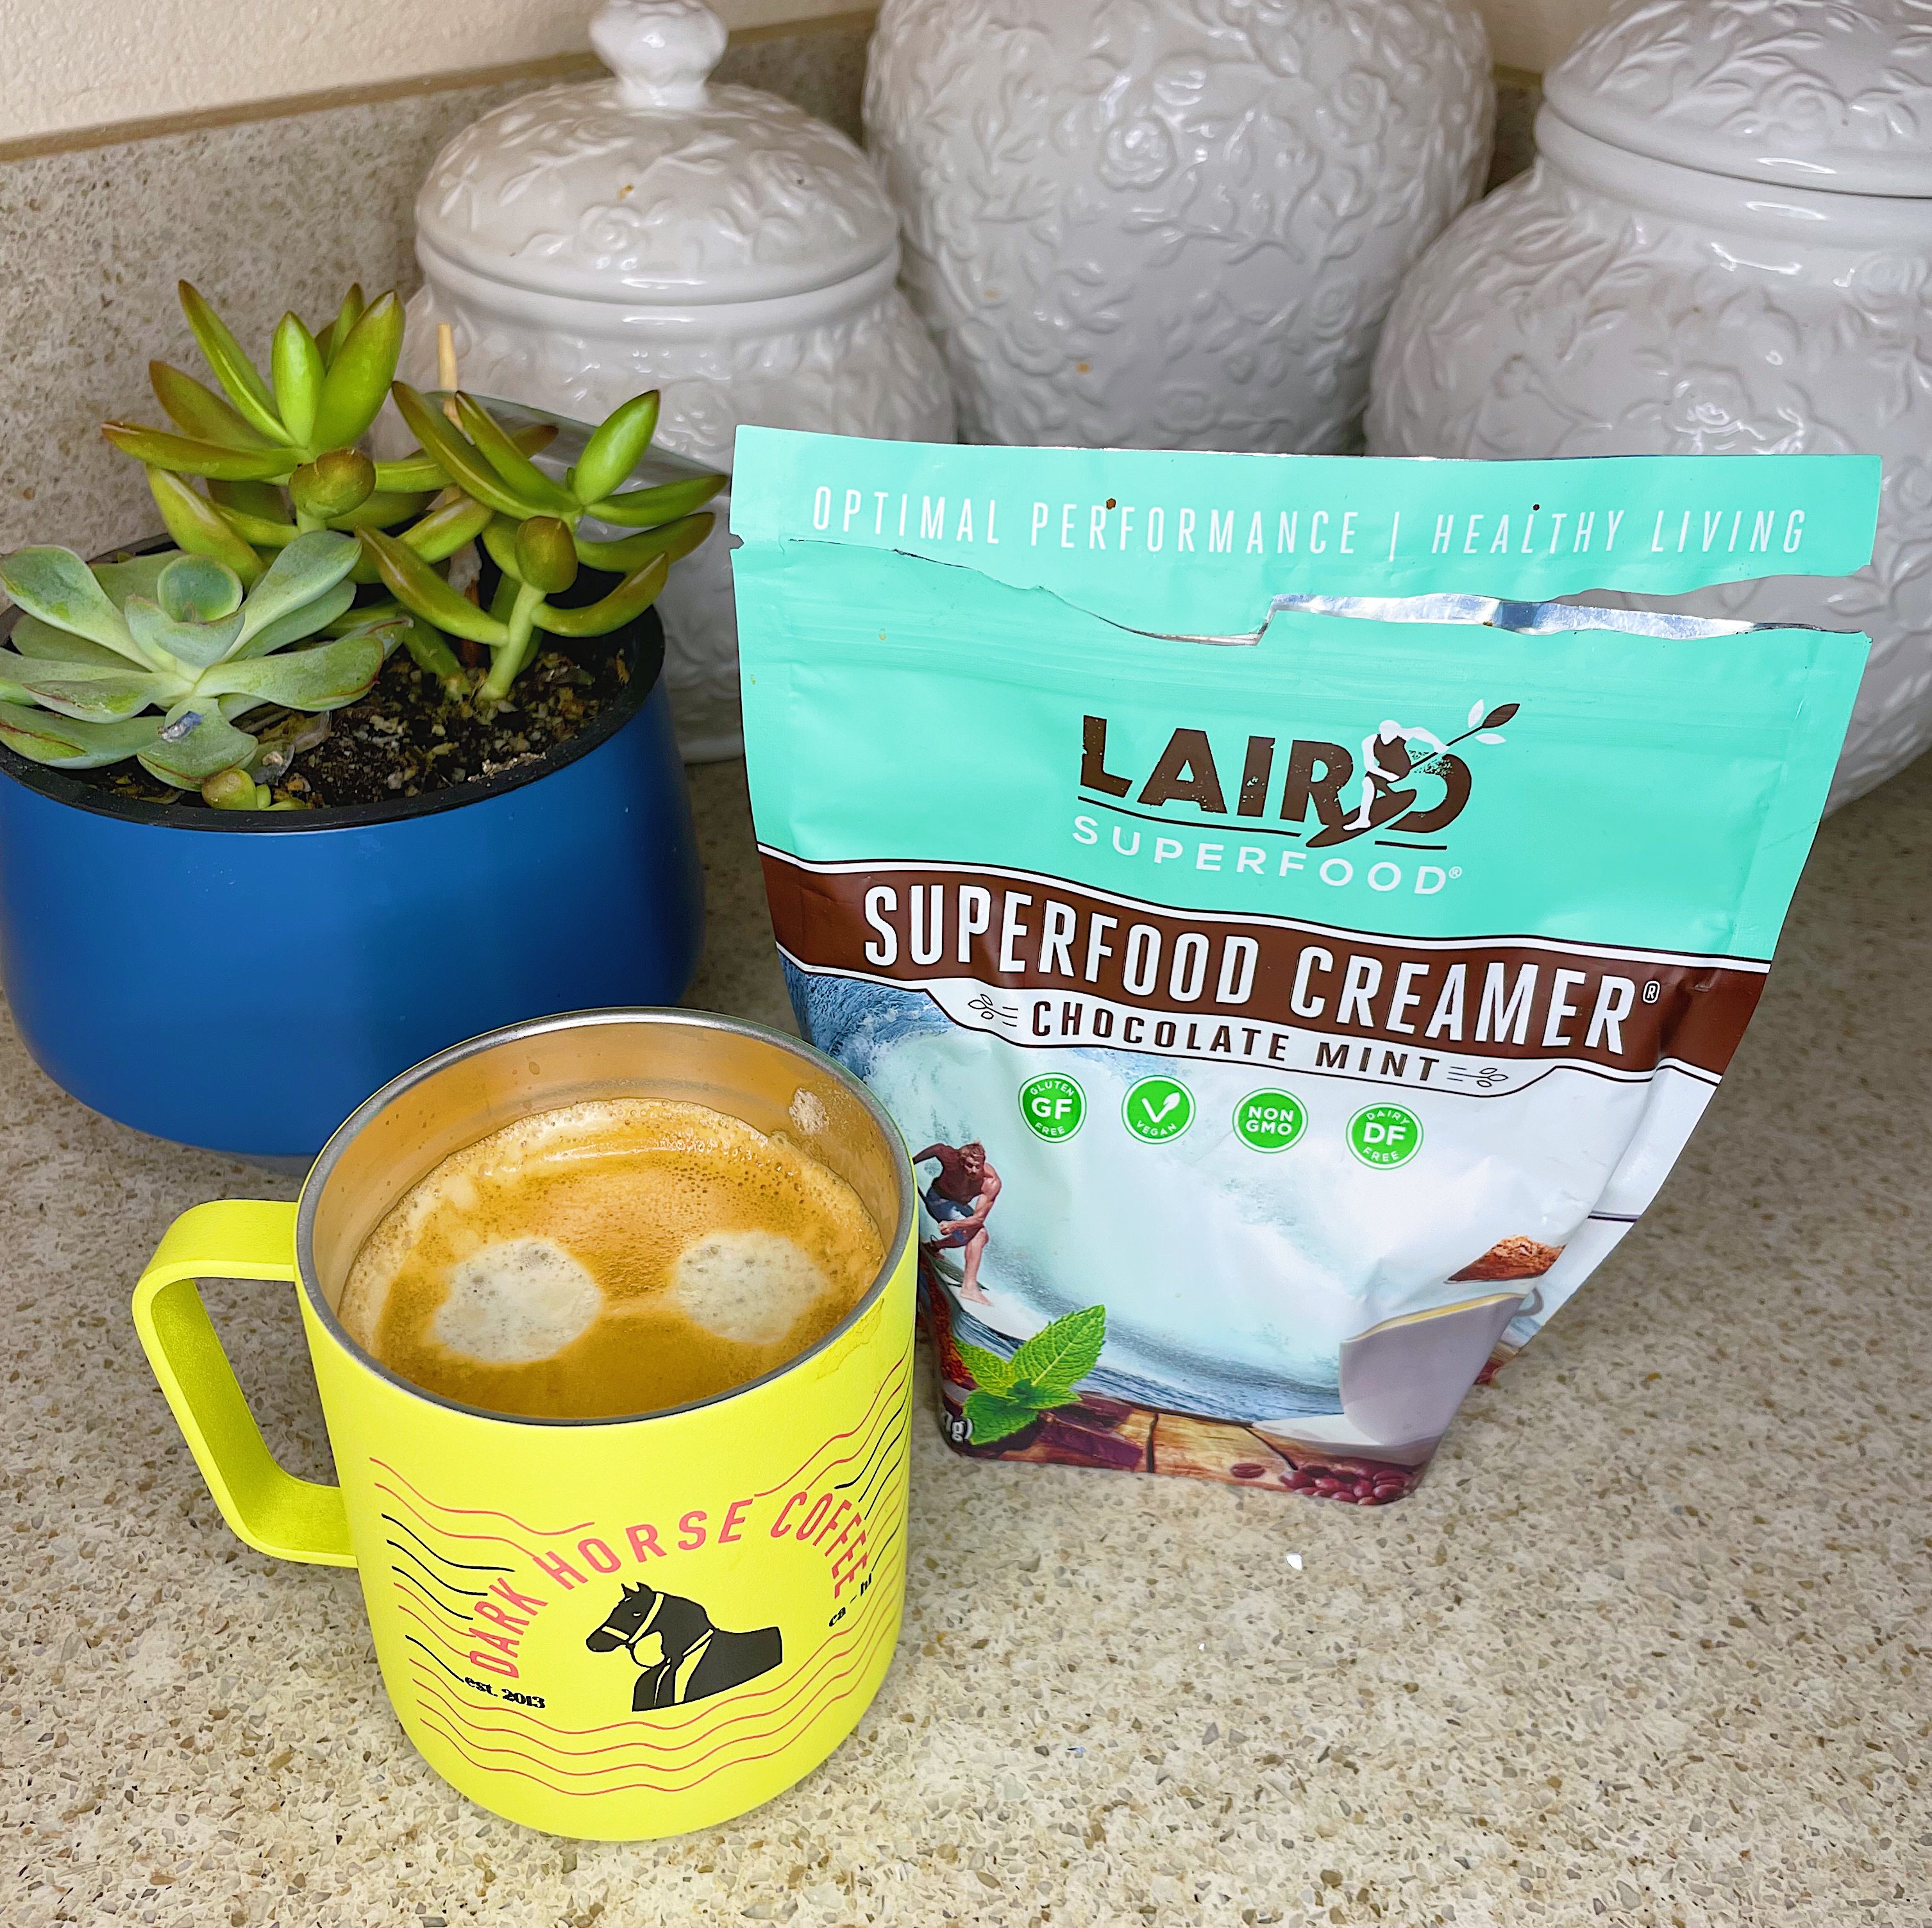 Healthy coffee creamer alternative option is Laird's Superfoods creamer